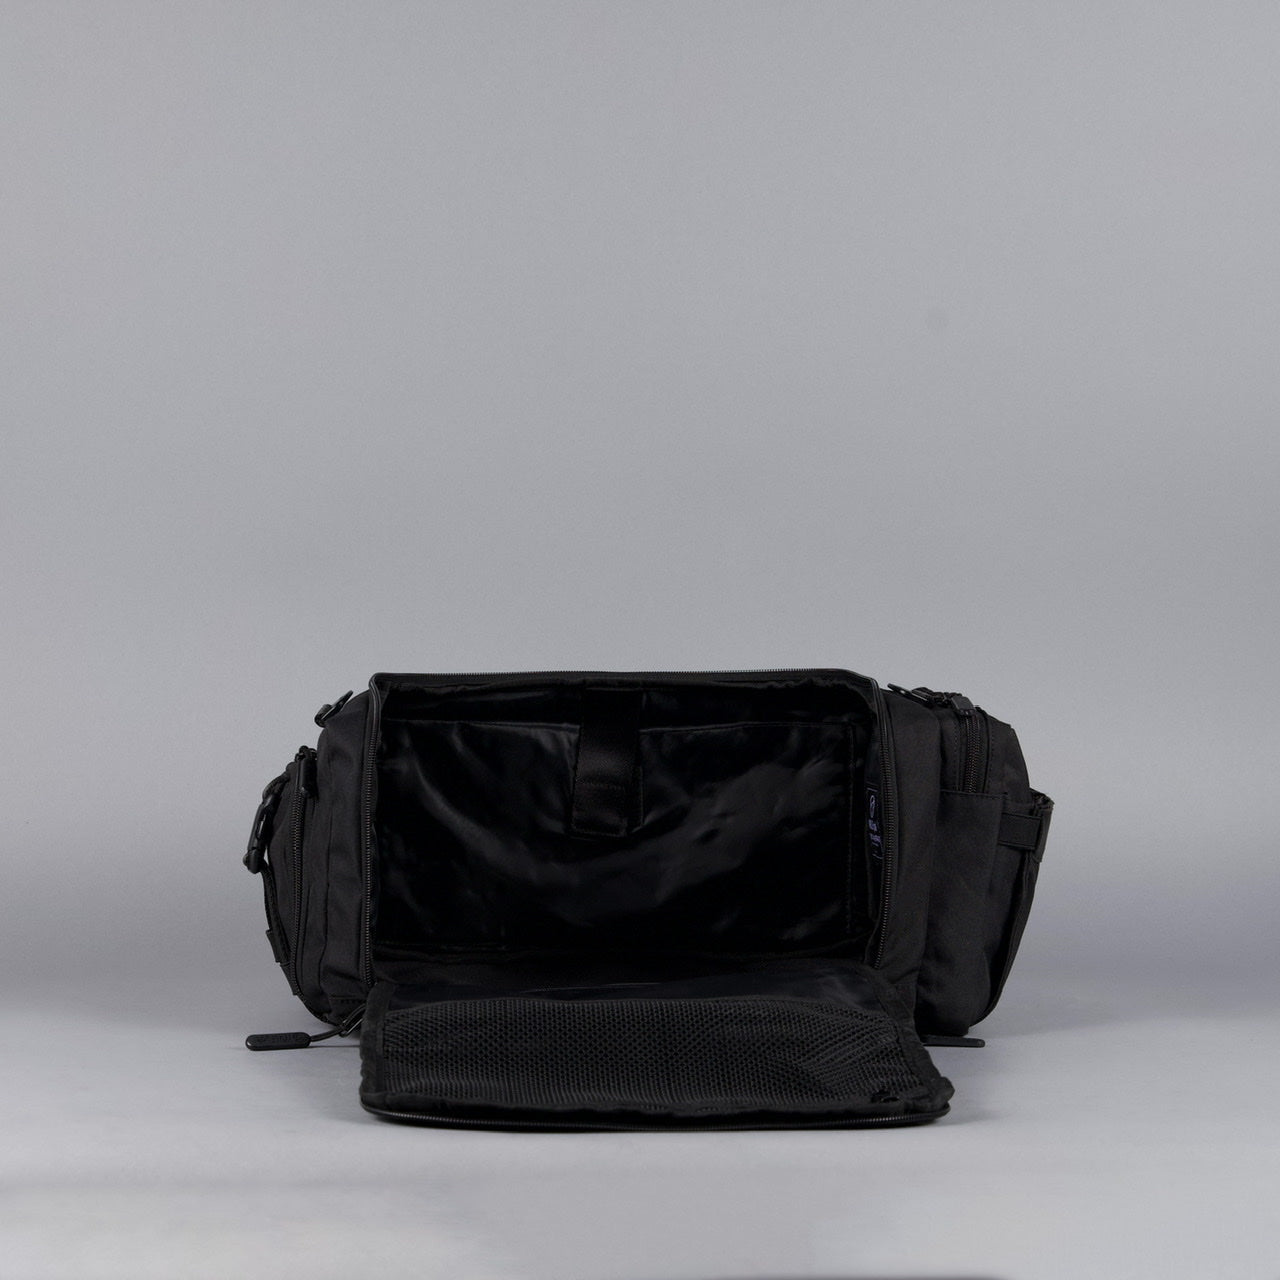 20L Mini Duffle Bag Nightshade